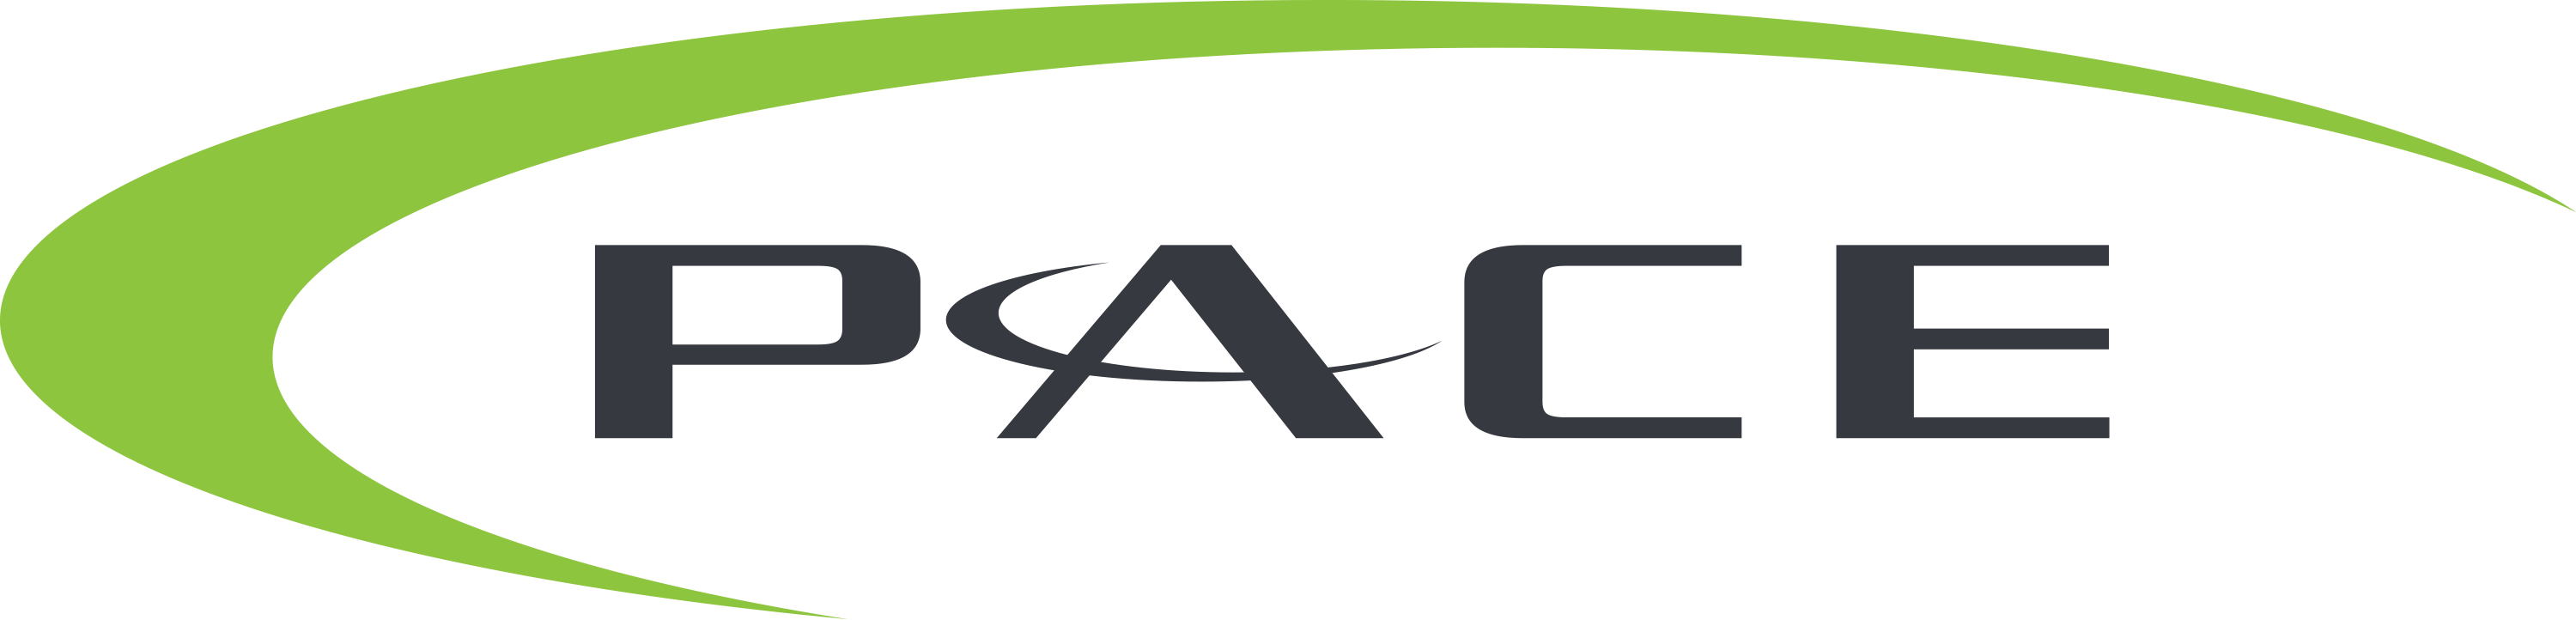 Pace International Company Logo